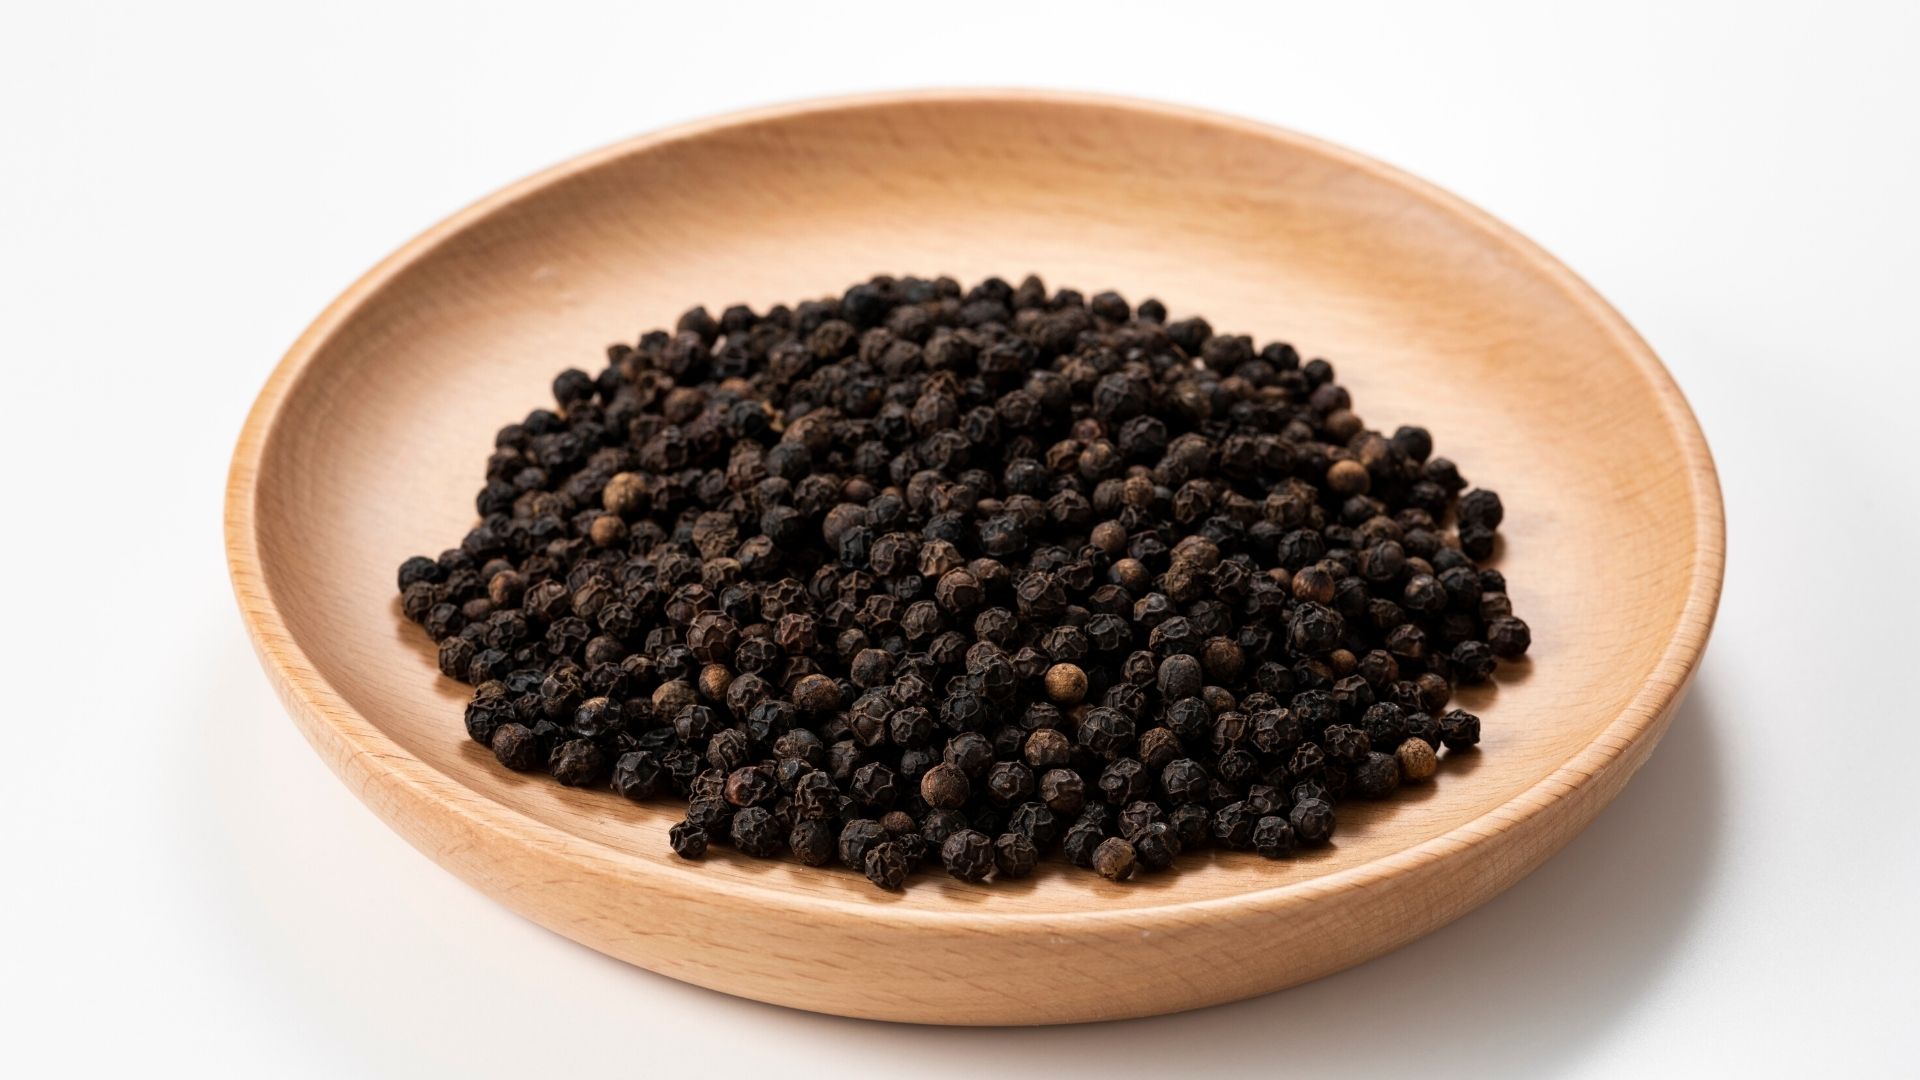 Kurkuma & zwarte peper: helpt zwarte peper bij de opname van kruiden?